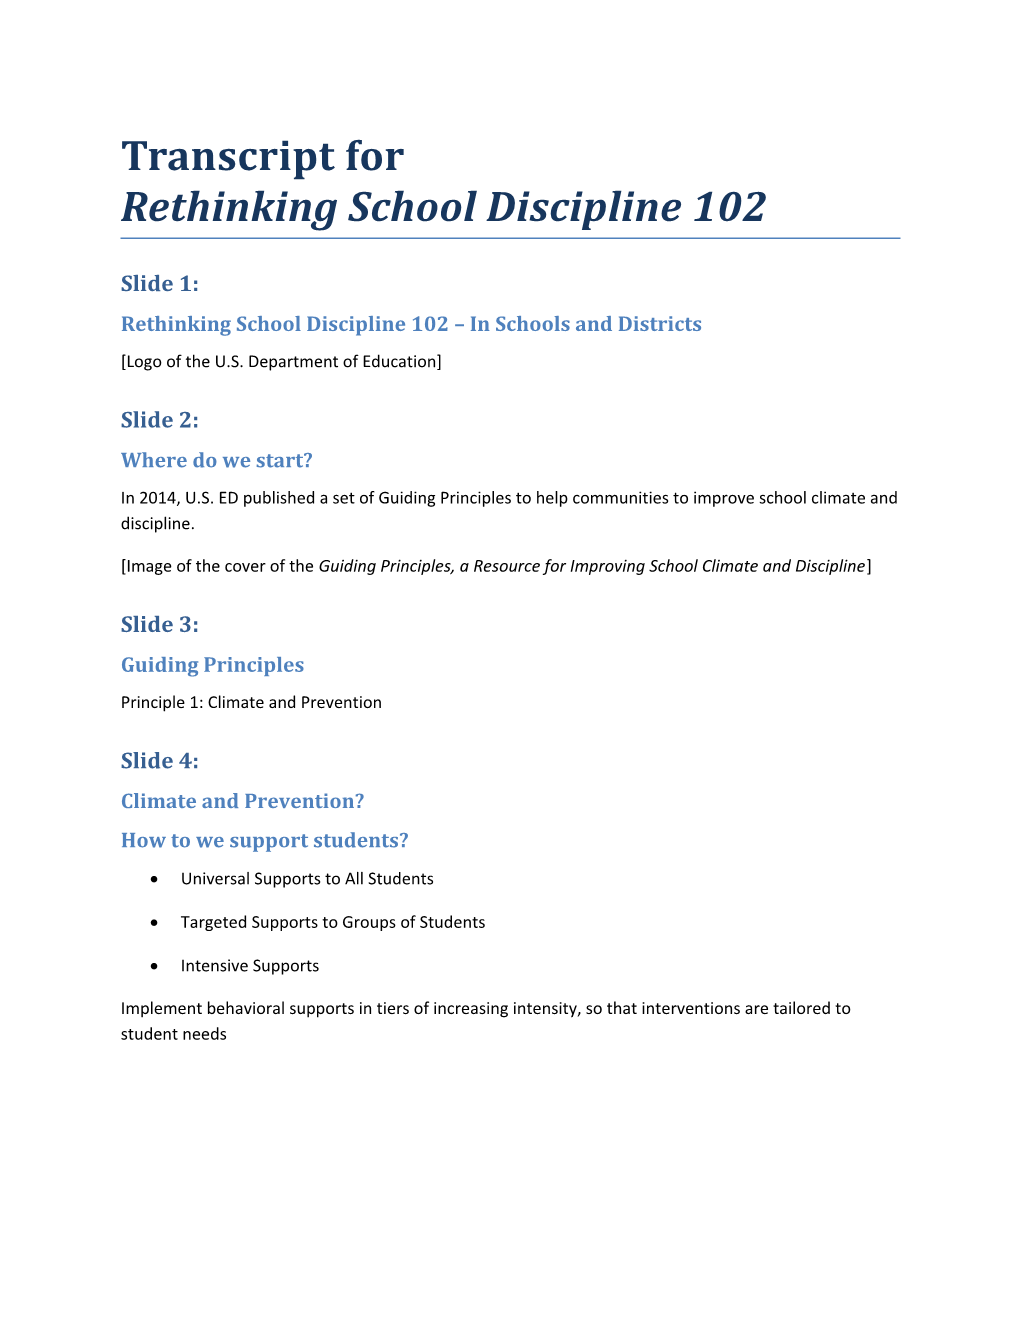 Transcript for Rethinking School Discipline 102 (MS Word)